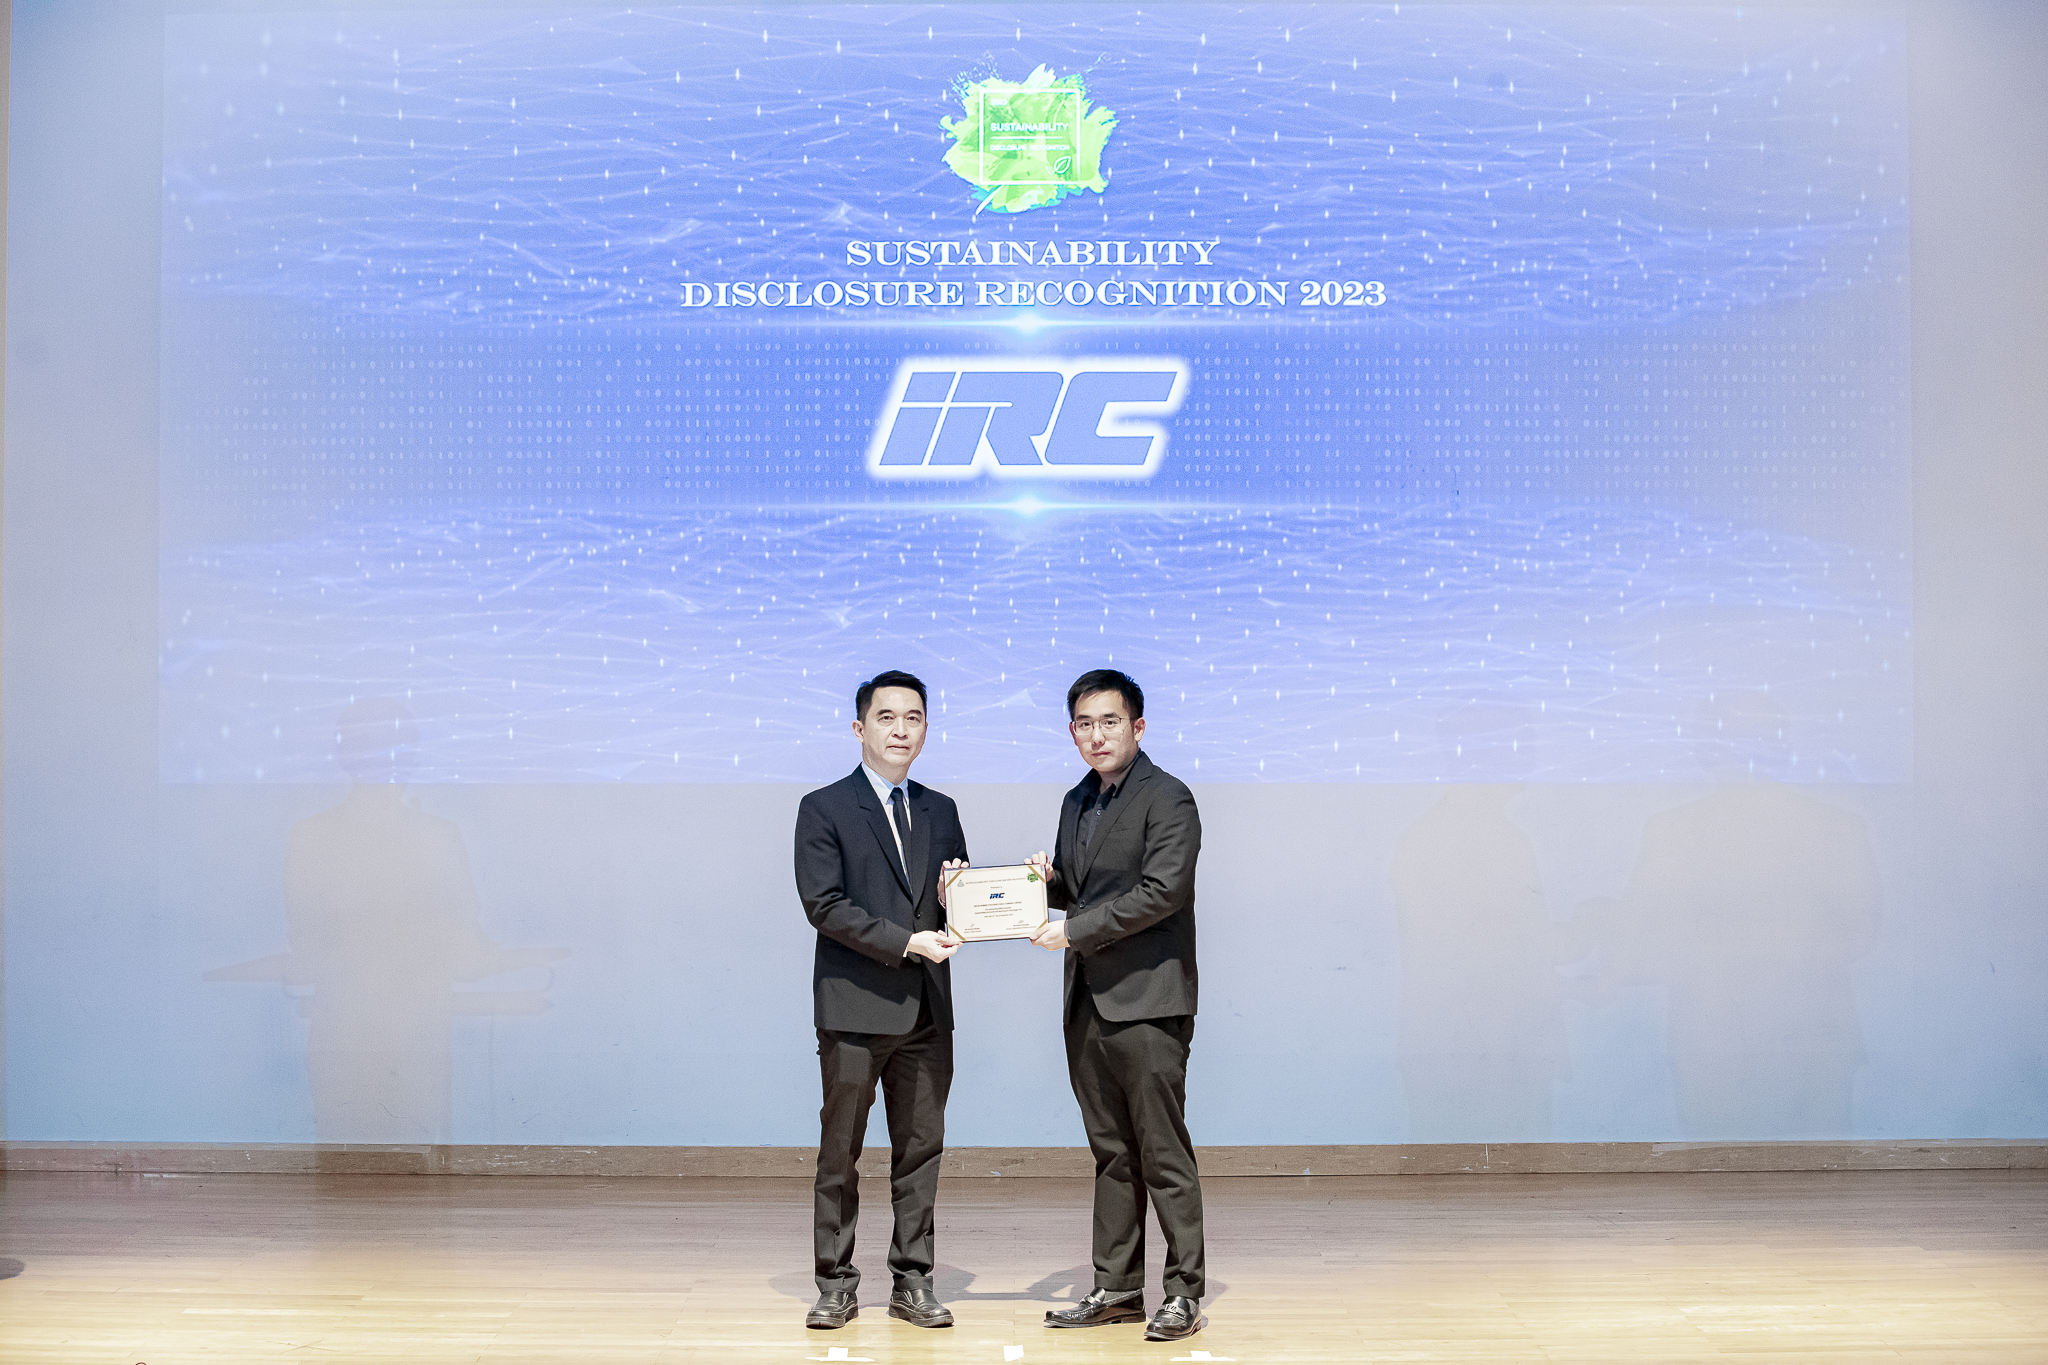 IRC ได้รับรางวัล “Sustainability Disclosure Recognition” ประจำปี 2566 จากสถาบันไทยพัฒน์